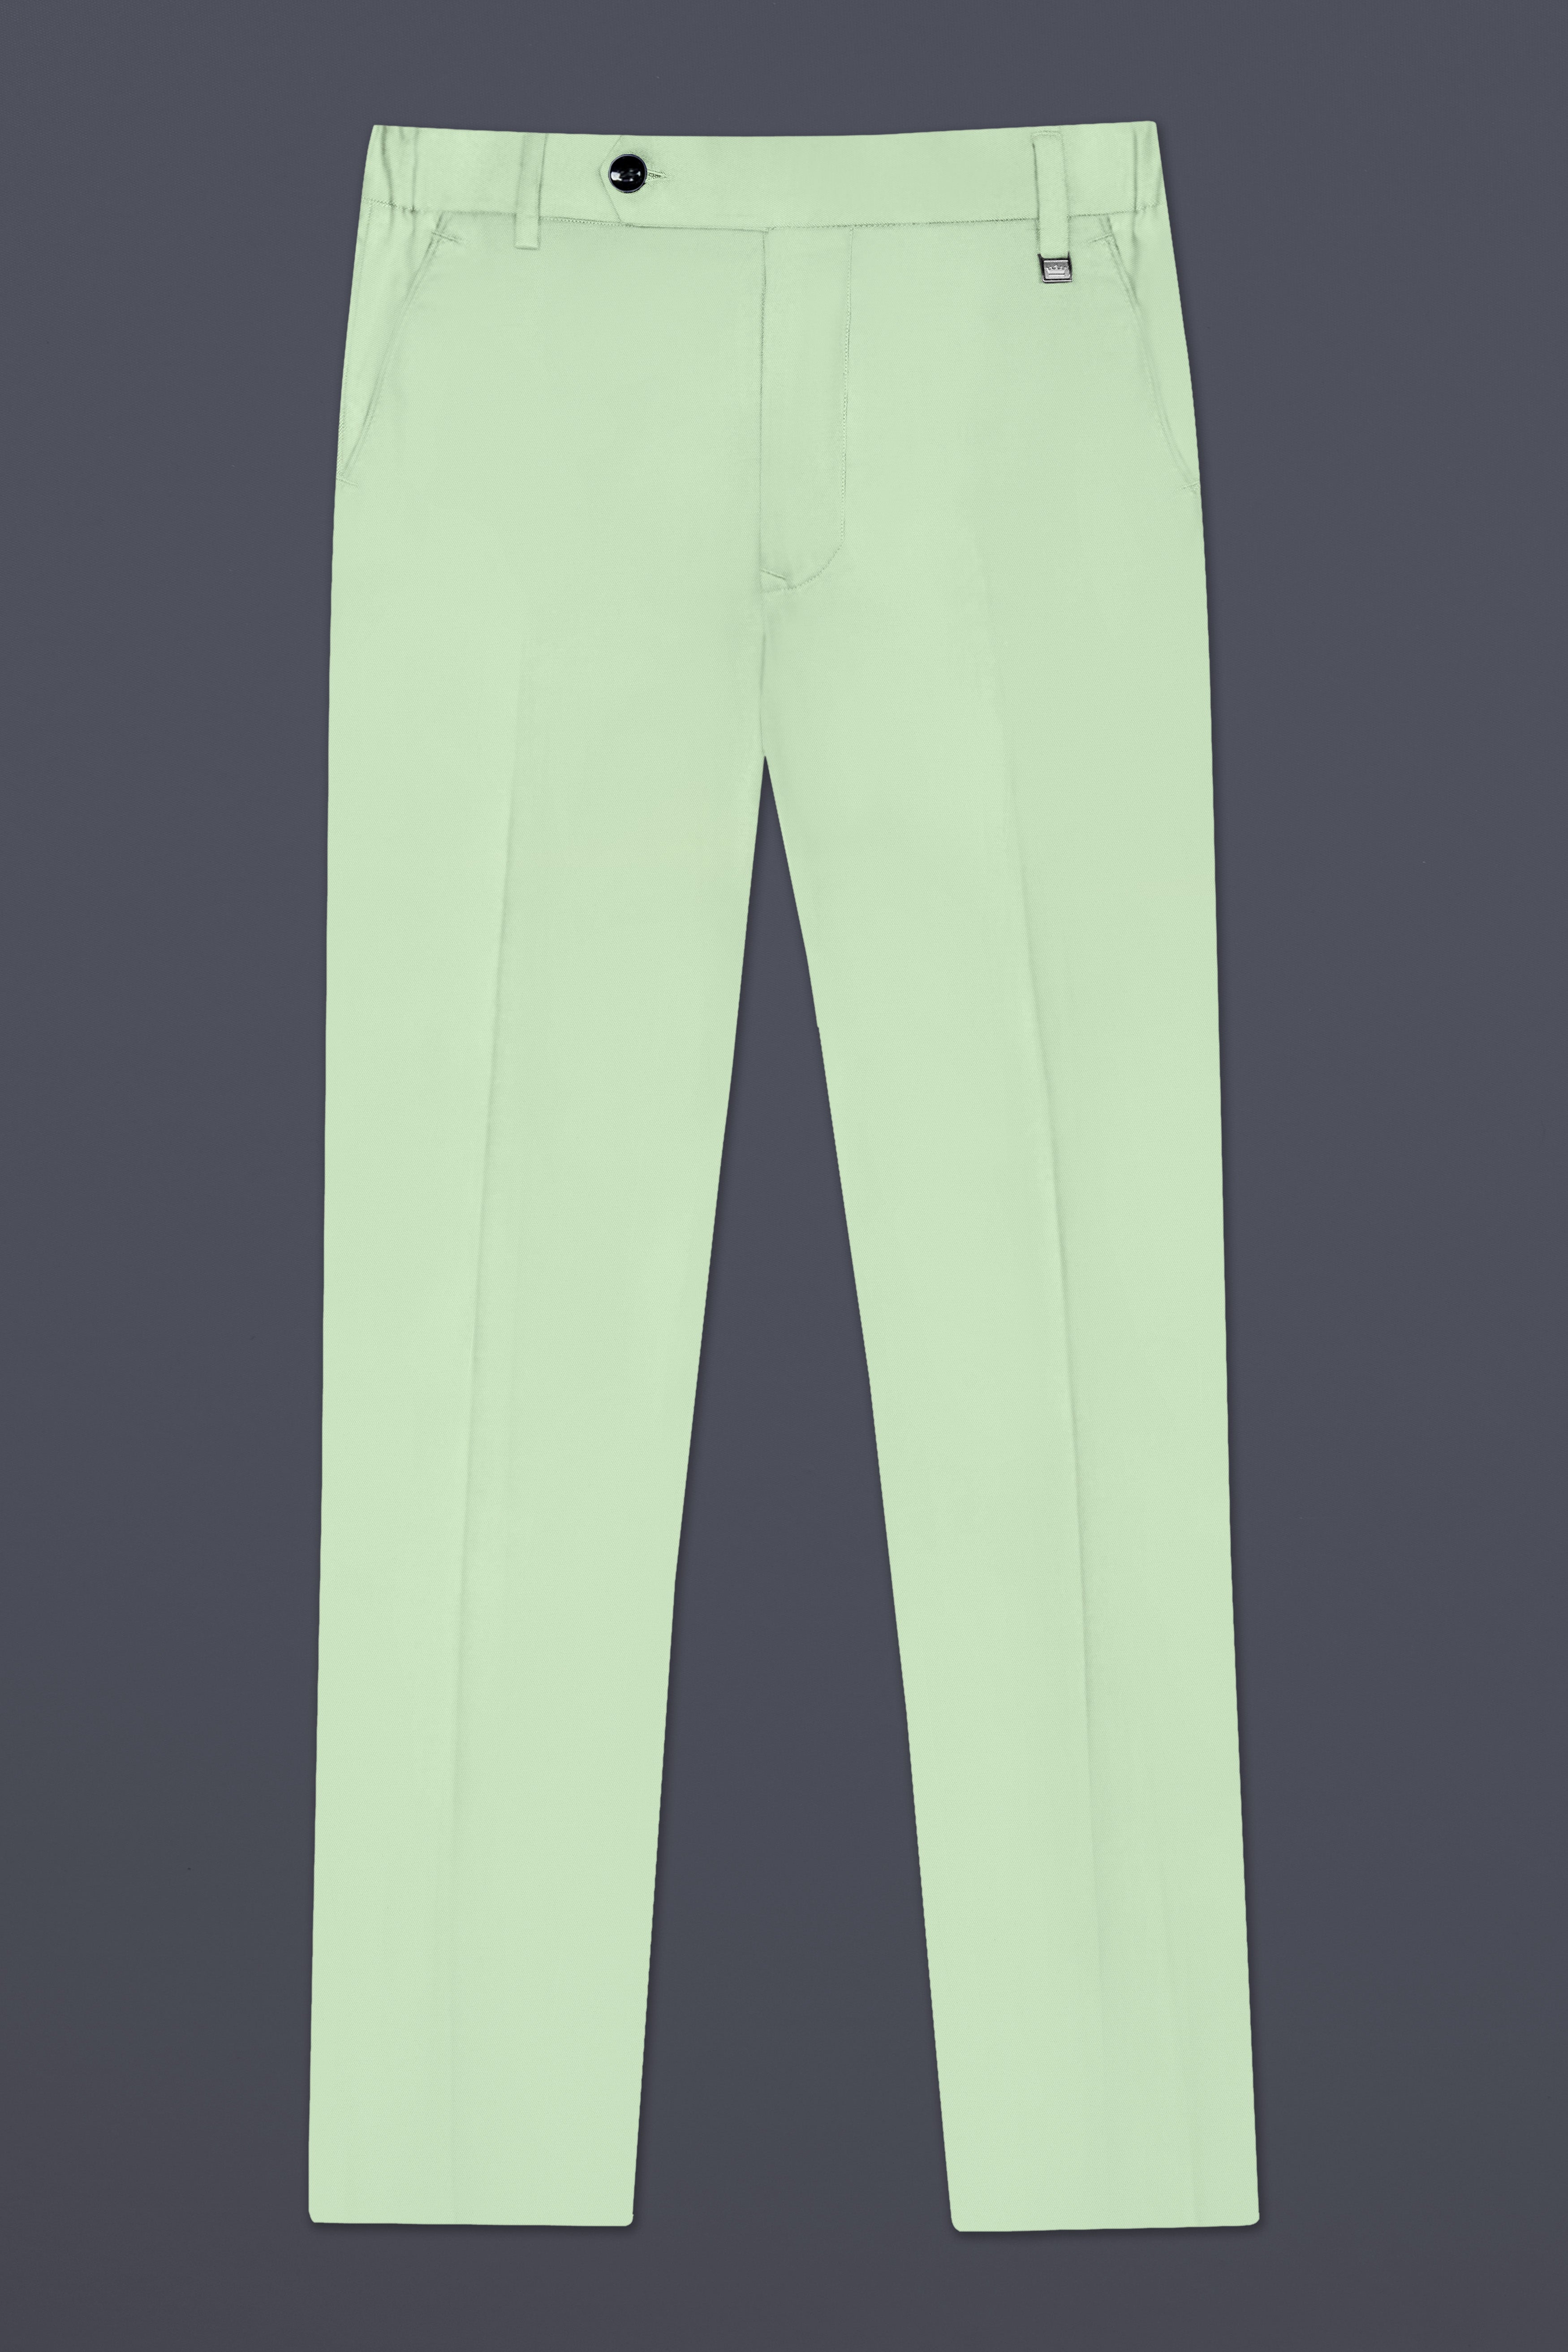 Pixie Green Bandhgala Suit